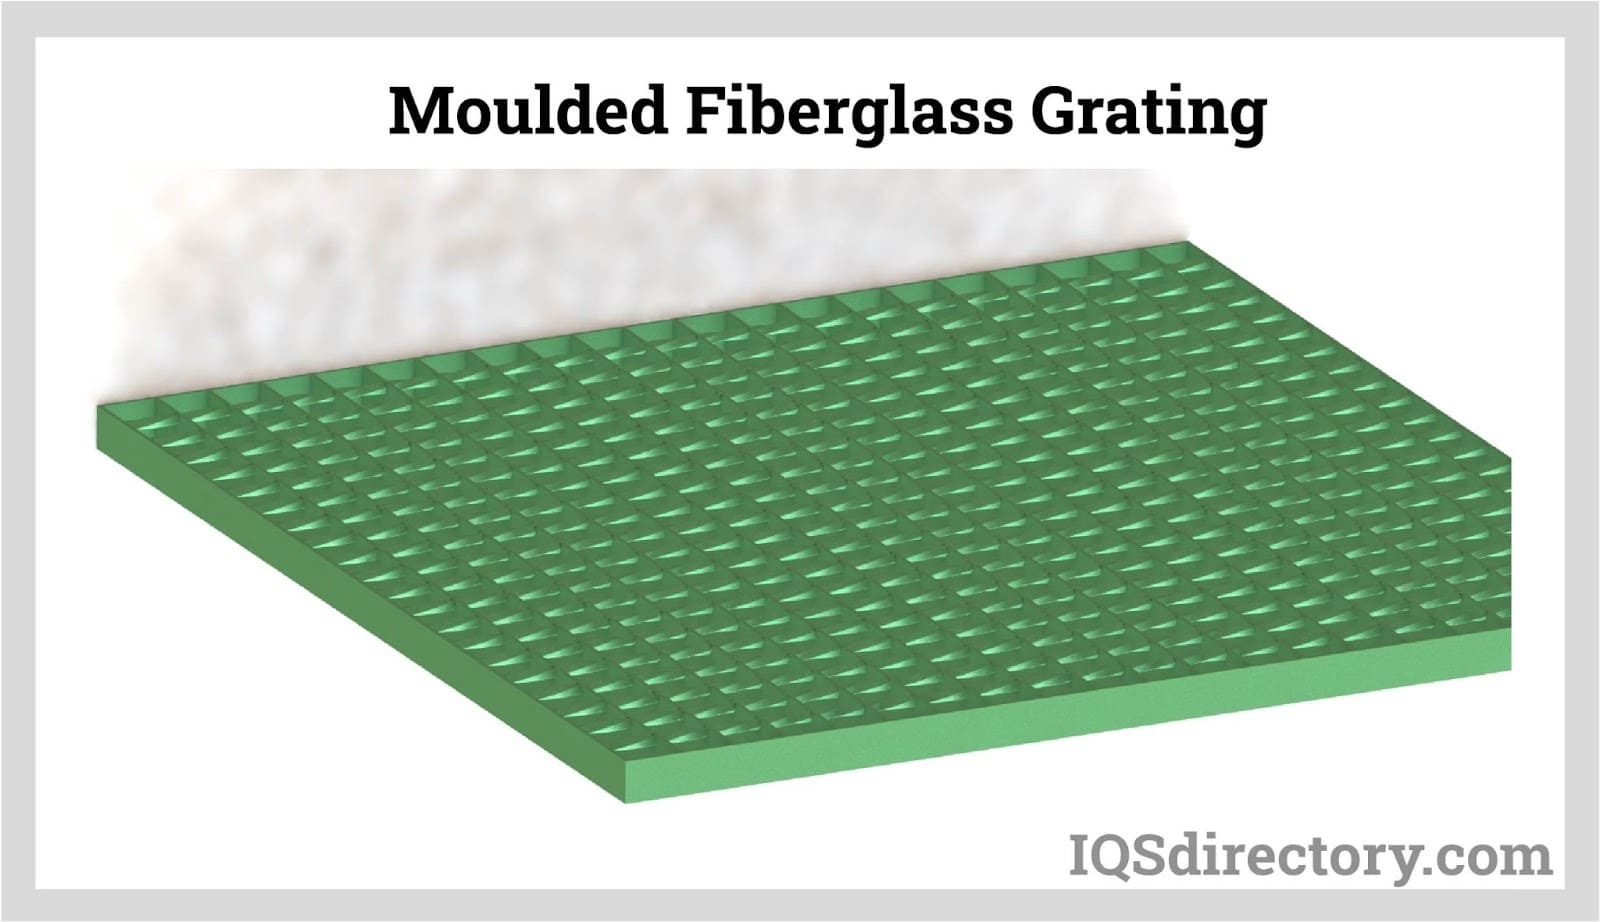 Moulded Fiberglass Grating